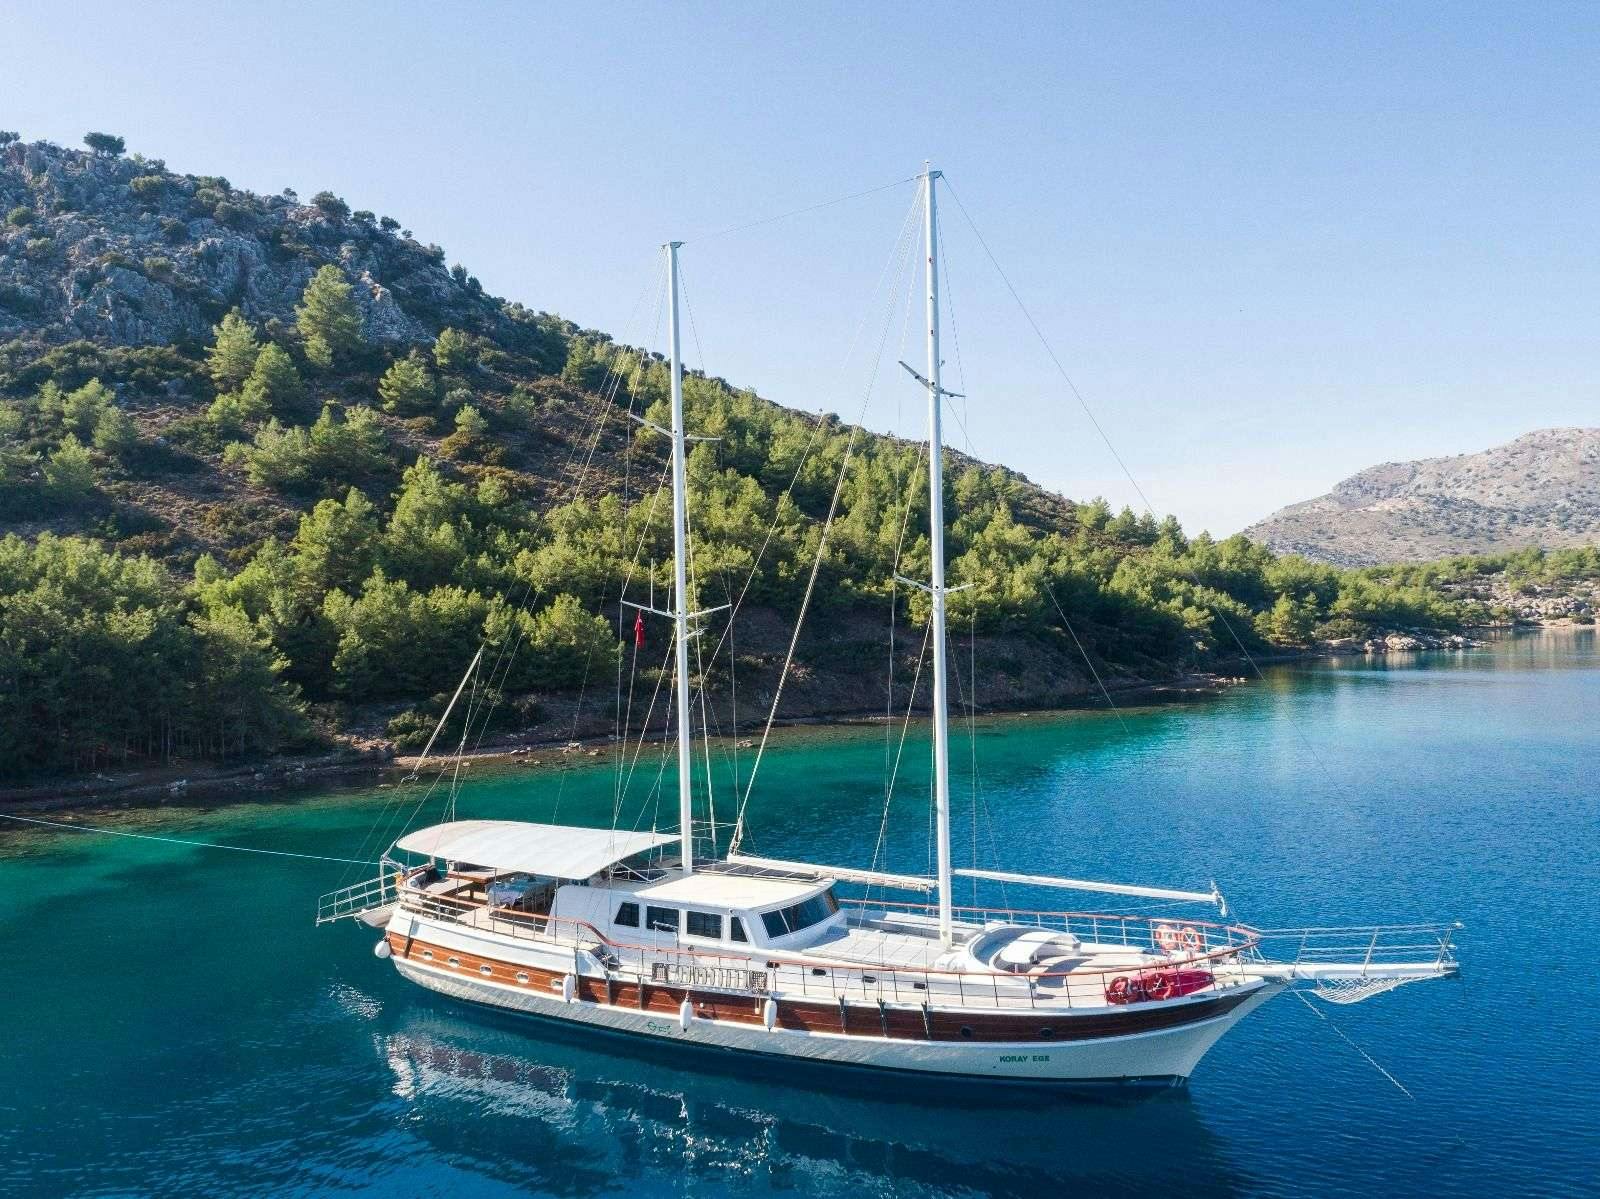 koray ege - Yacht Charter Istanbul & Boat hire in Greece & Turkey 1